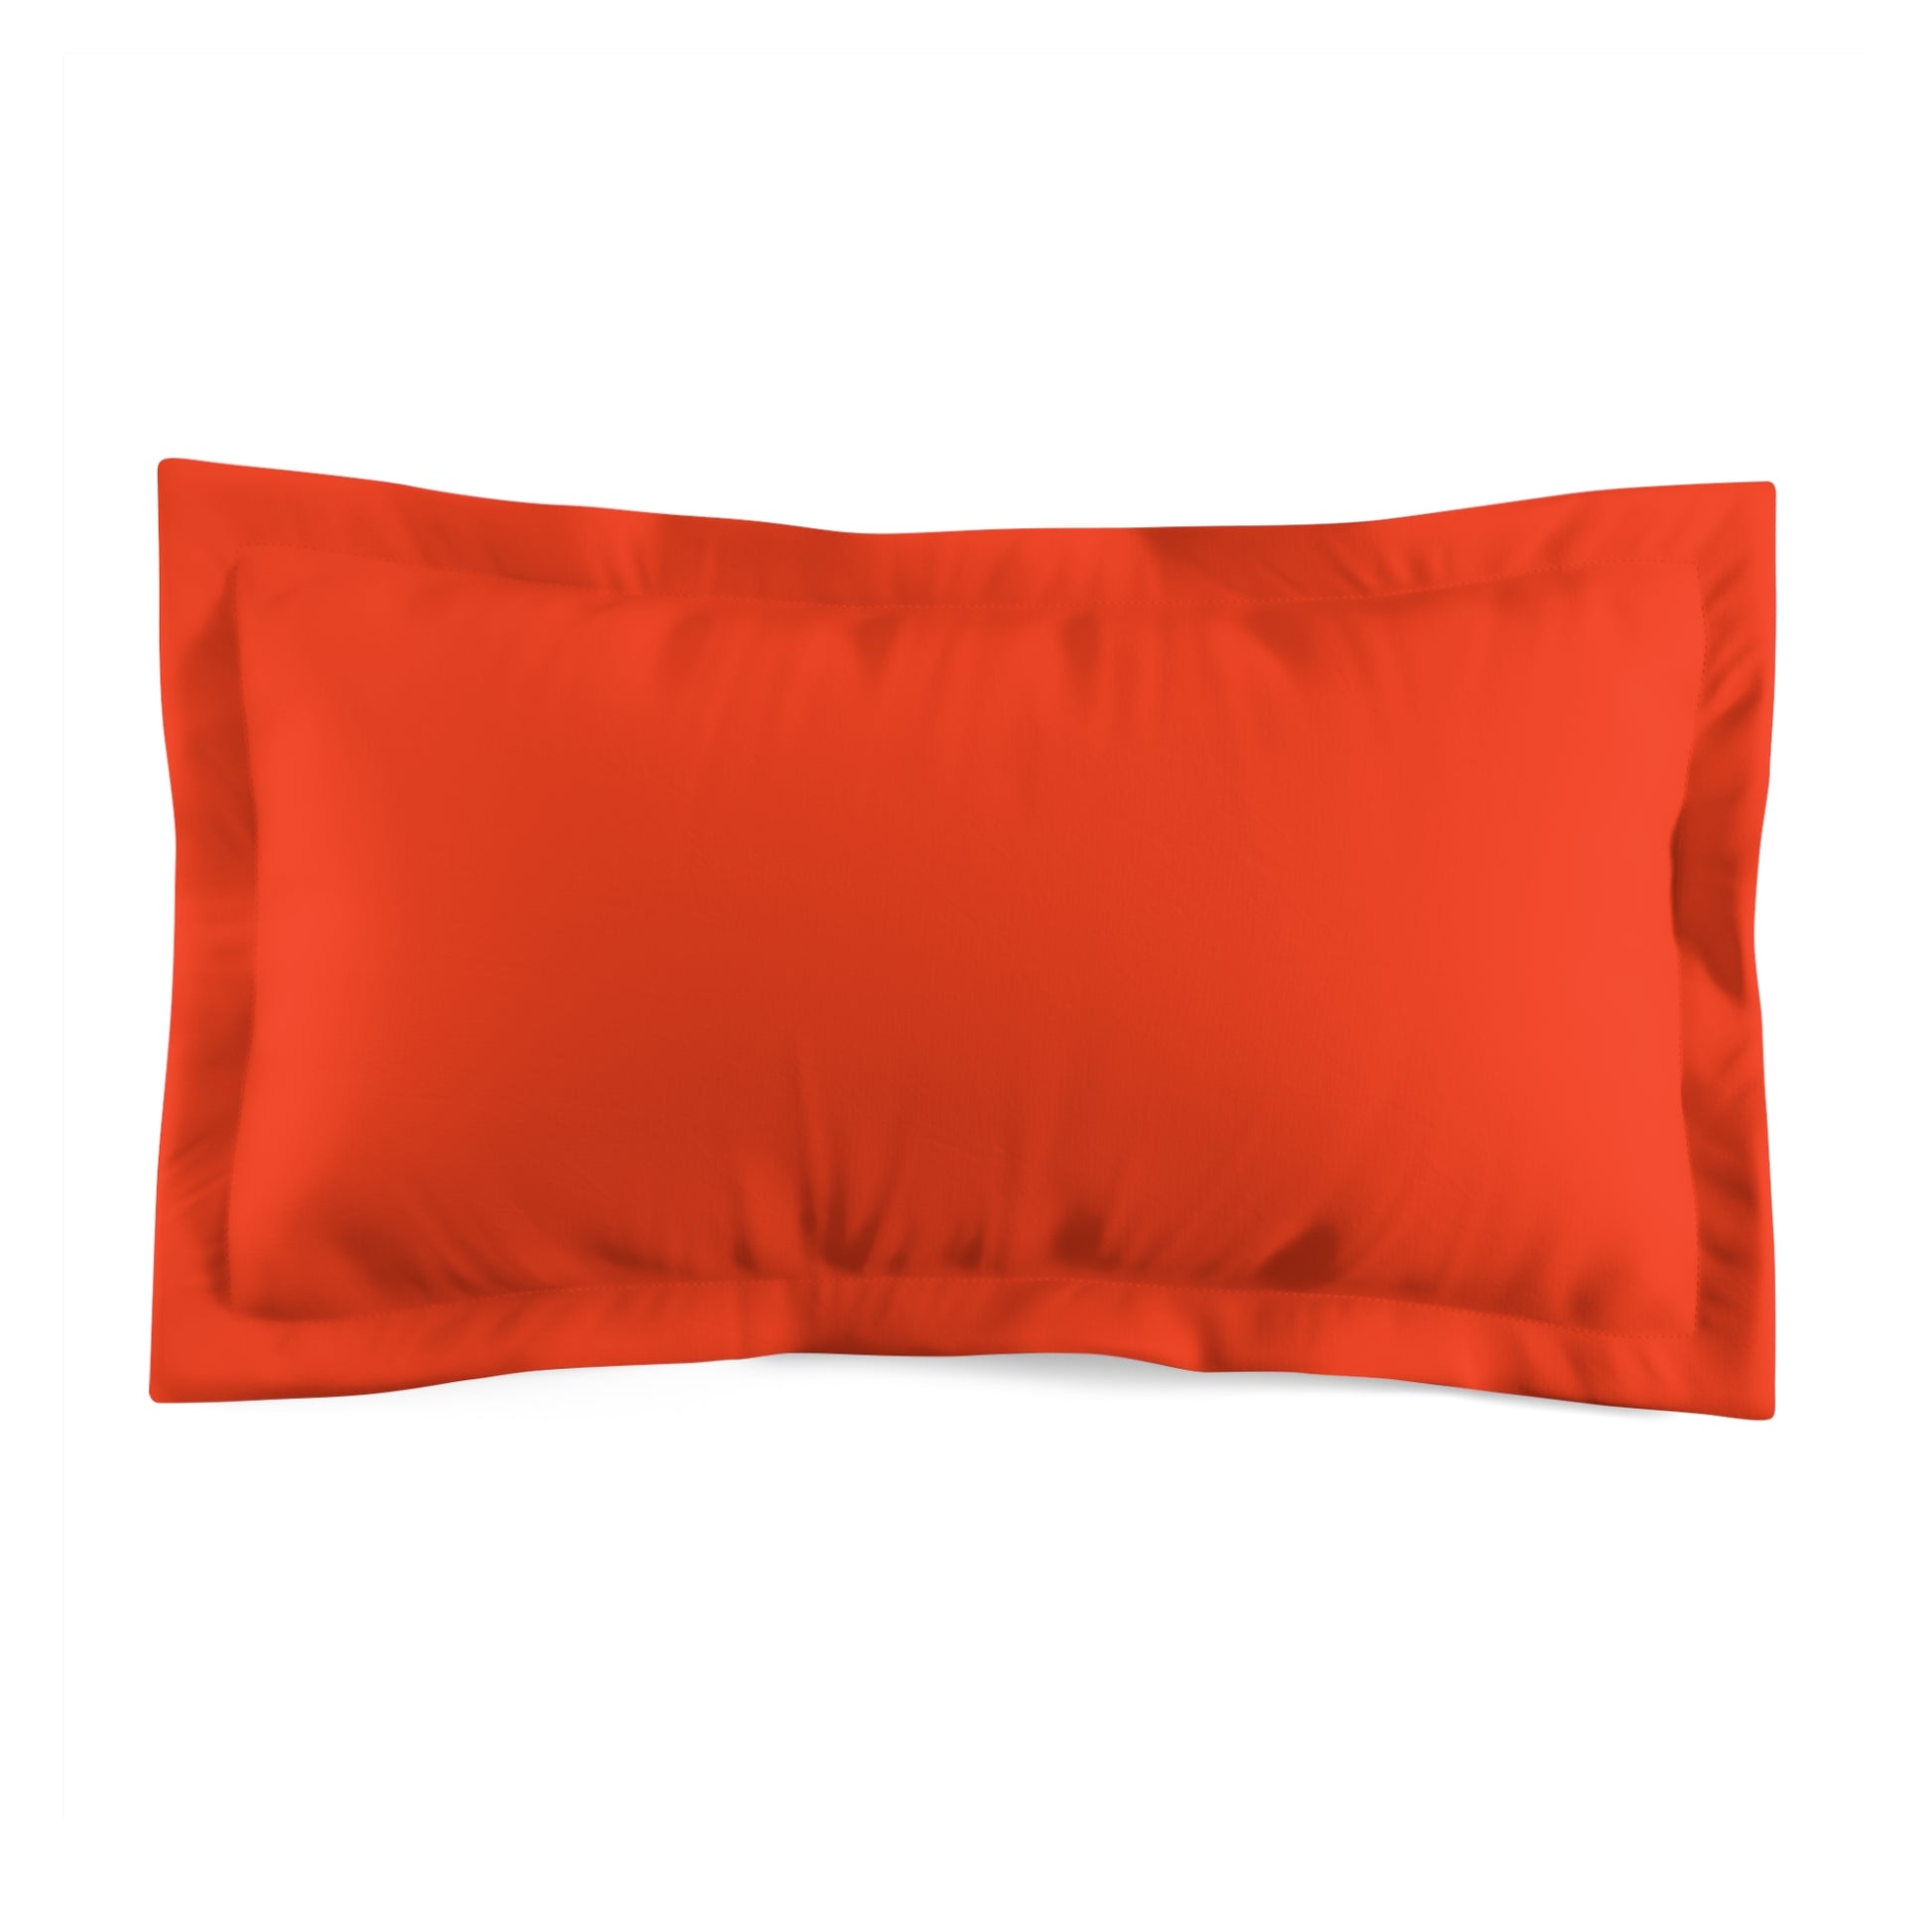 Soft and Cozy Microfiber Pillow Sham - Create Your Dream Bedroom - Expressive DeZien 